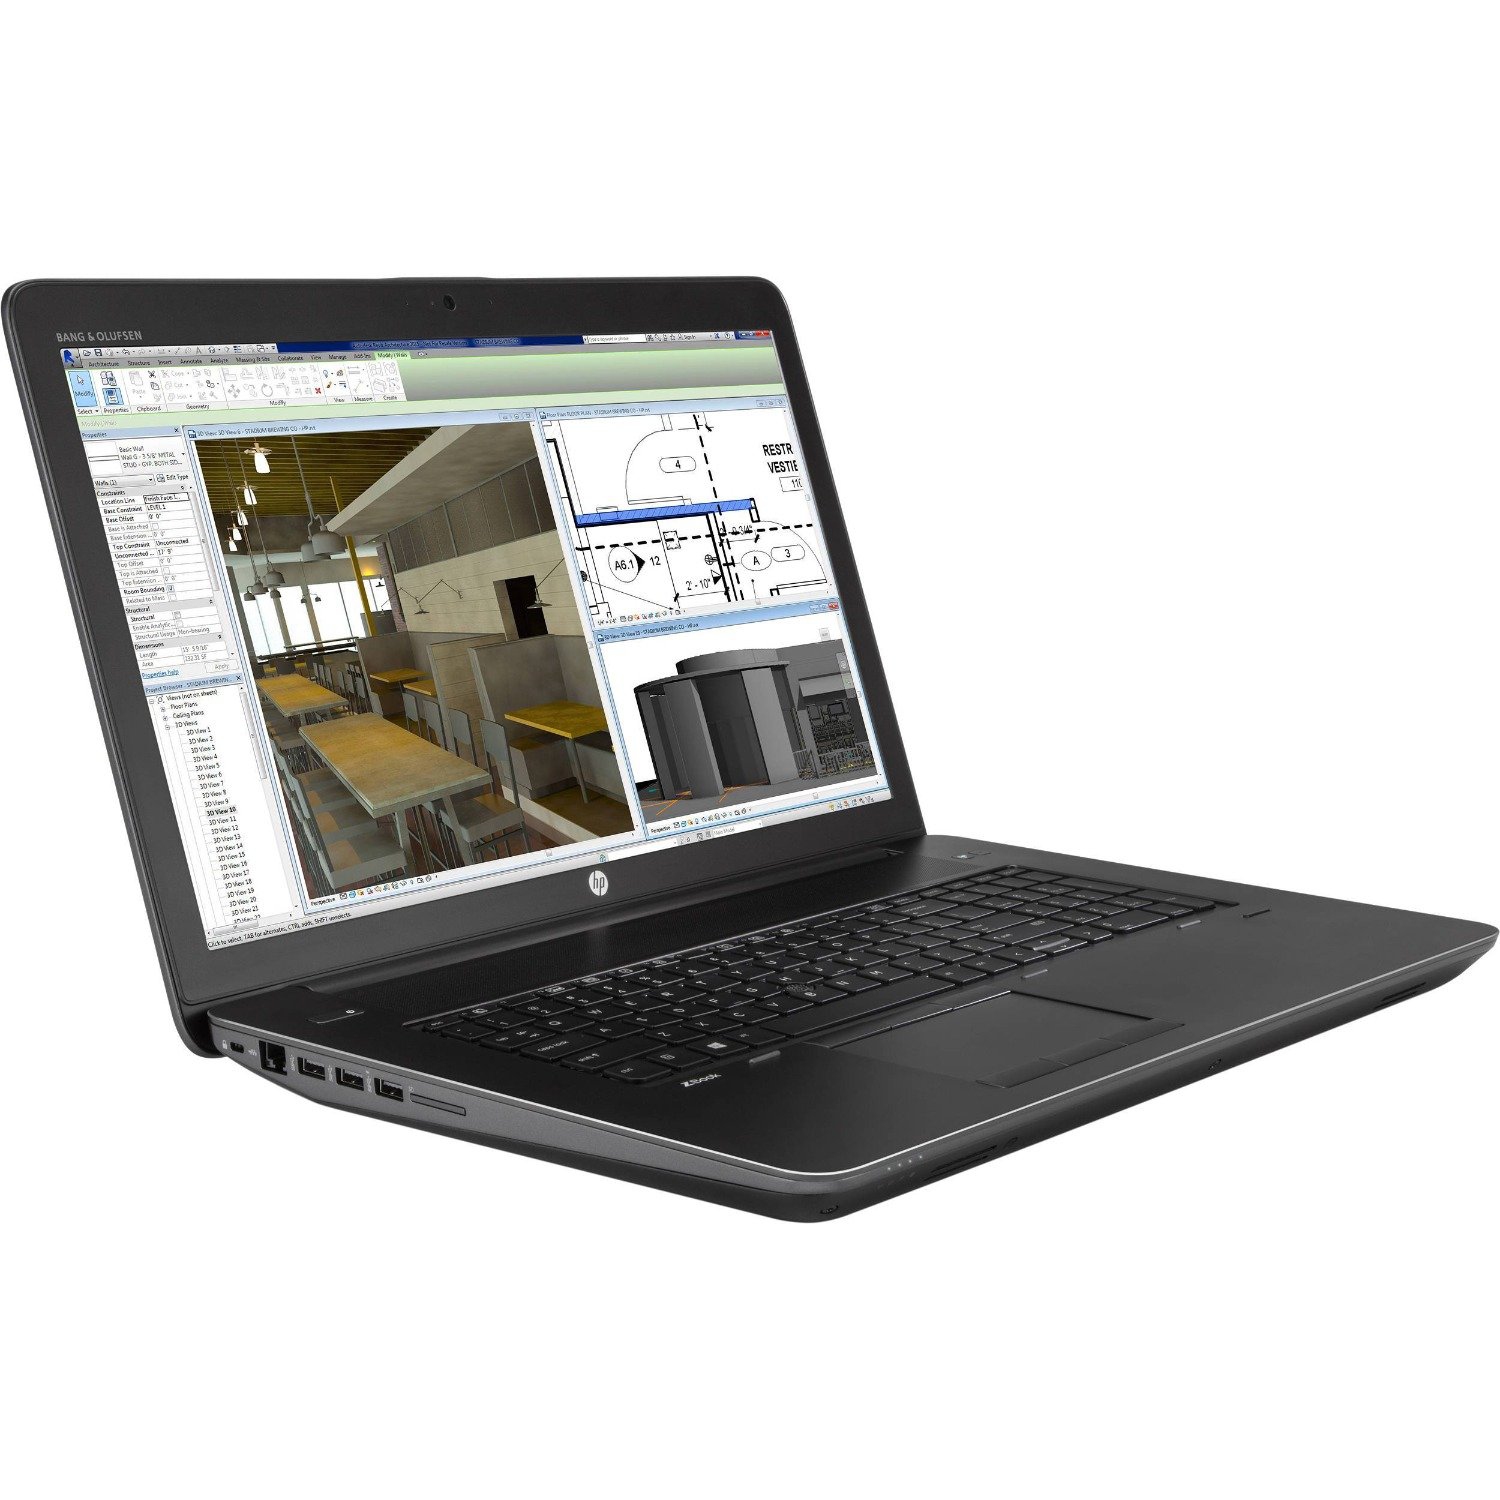 Refurbished (Good) - HP ZBook 17 G3 17.3" Touchscreen Laptop, Intel Core i7, 16GB RAM, 512GB SSD, Win10 Pro.